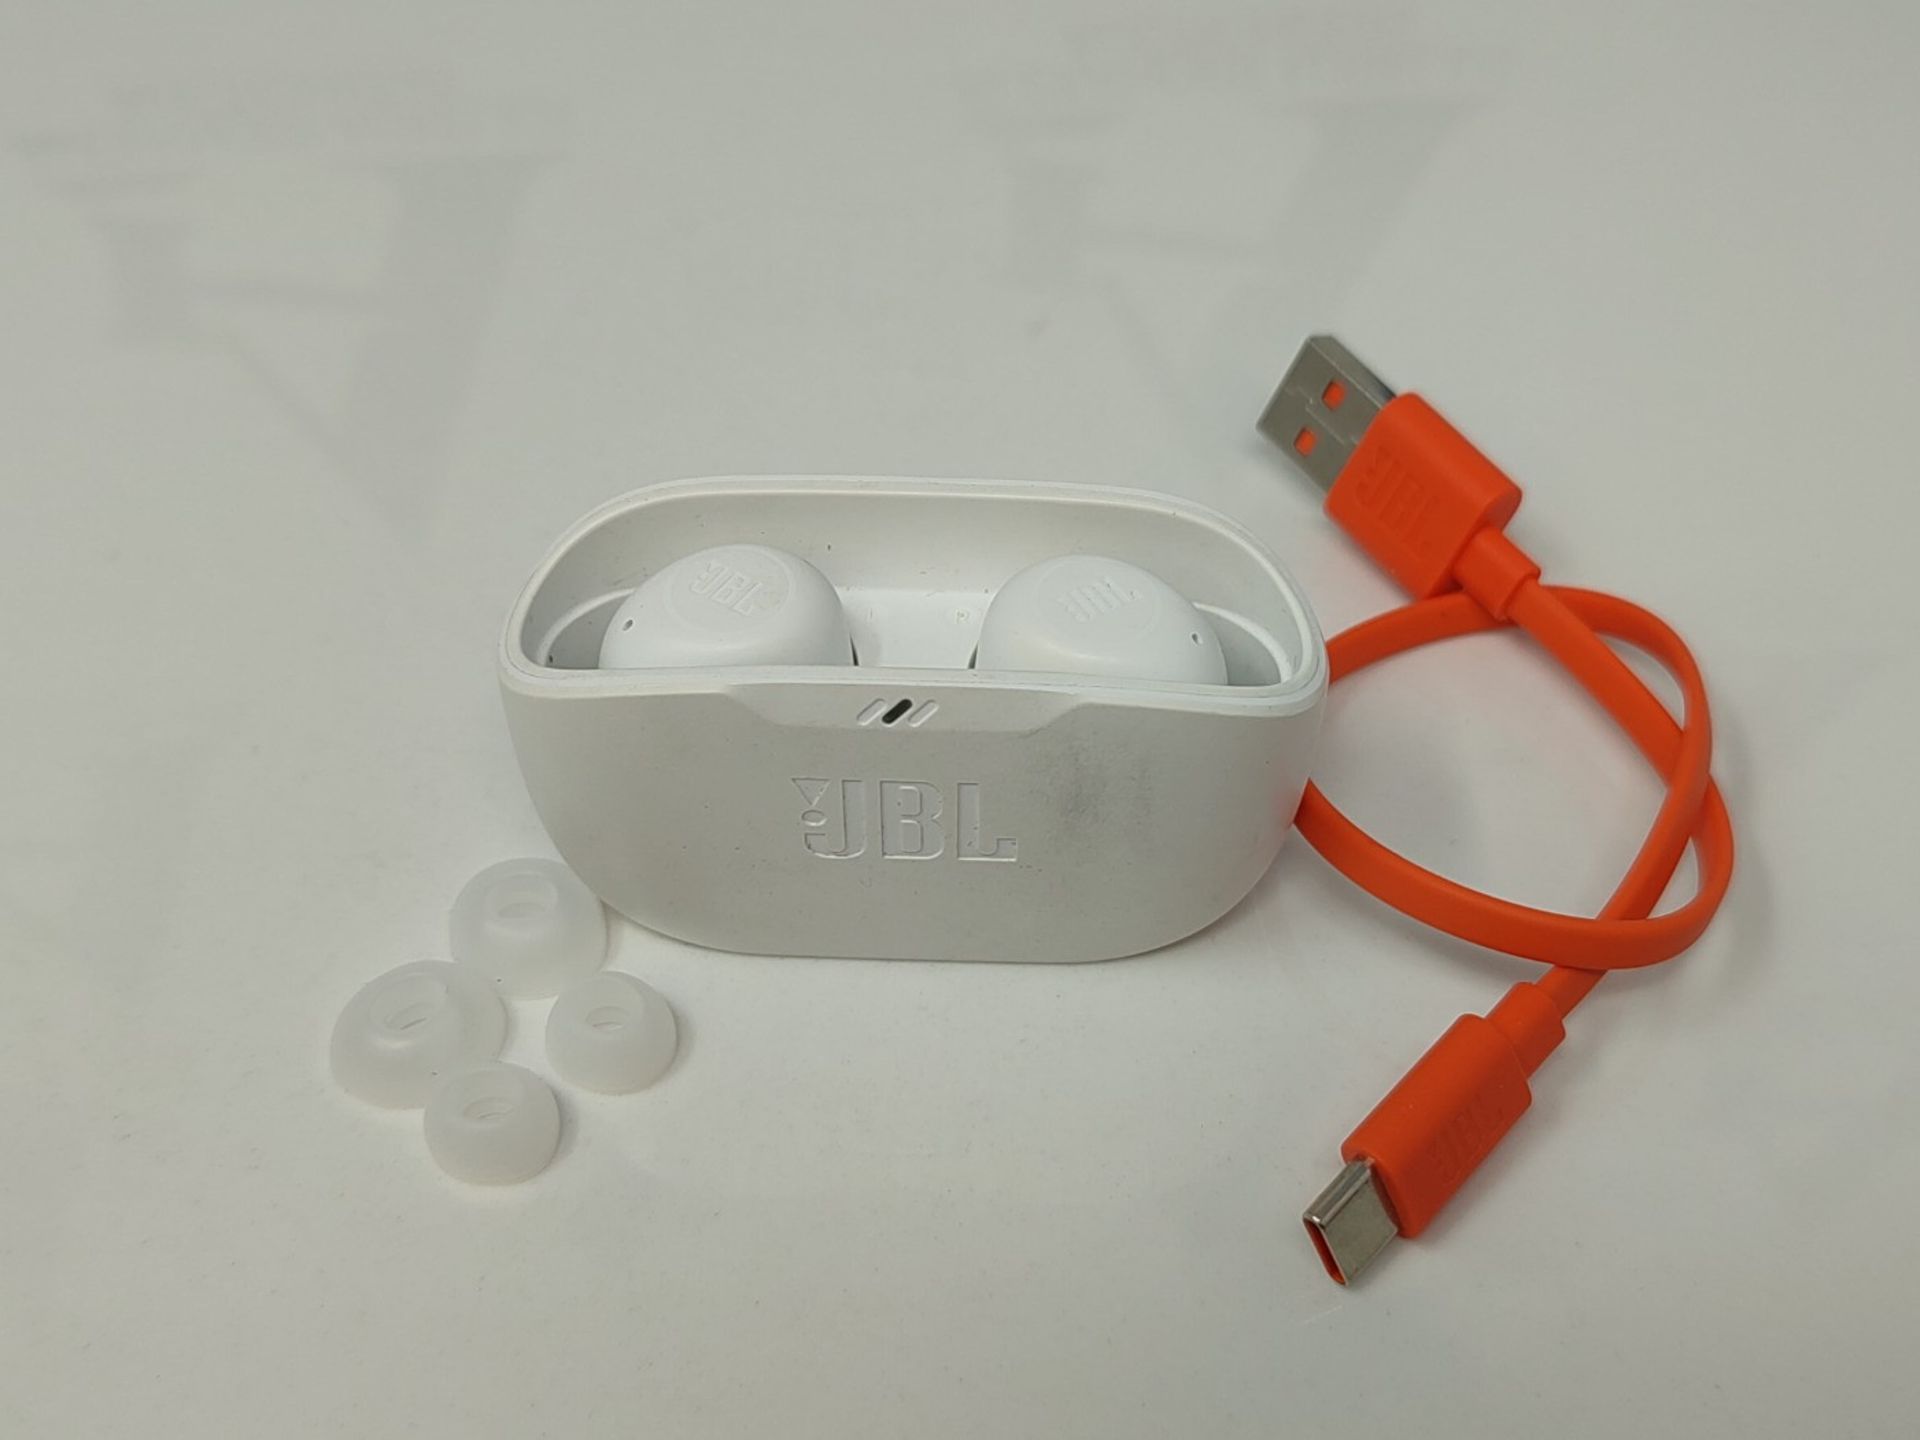 JBL Wave Buds Wireless In-Ear Bluetooth Earphones, Waterproof IP54 and Dustproof IPX2, - Image 3 of 3